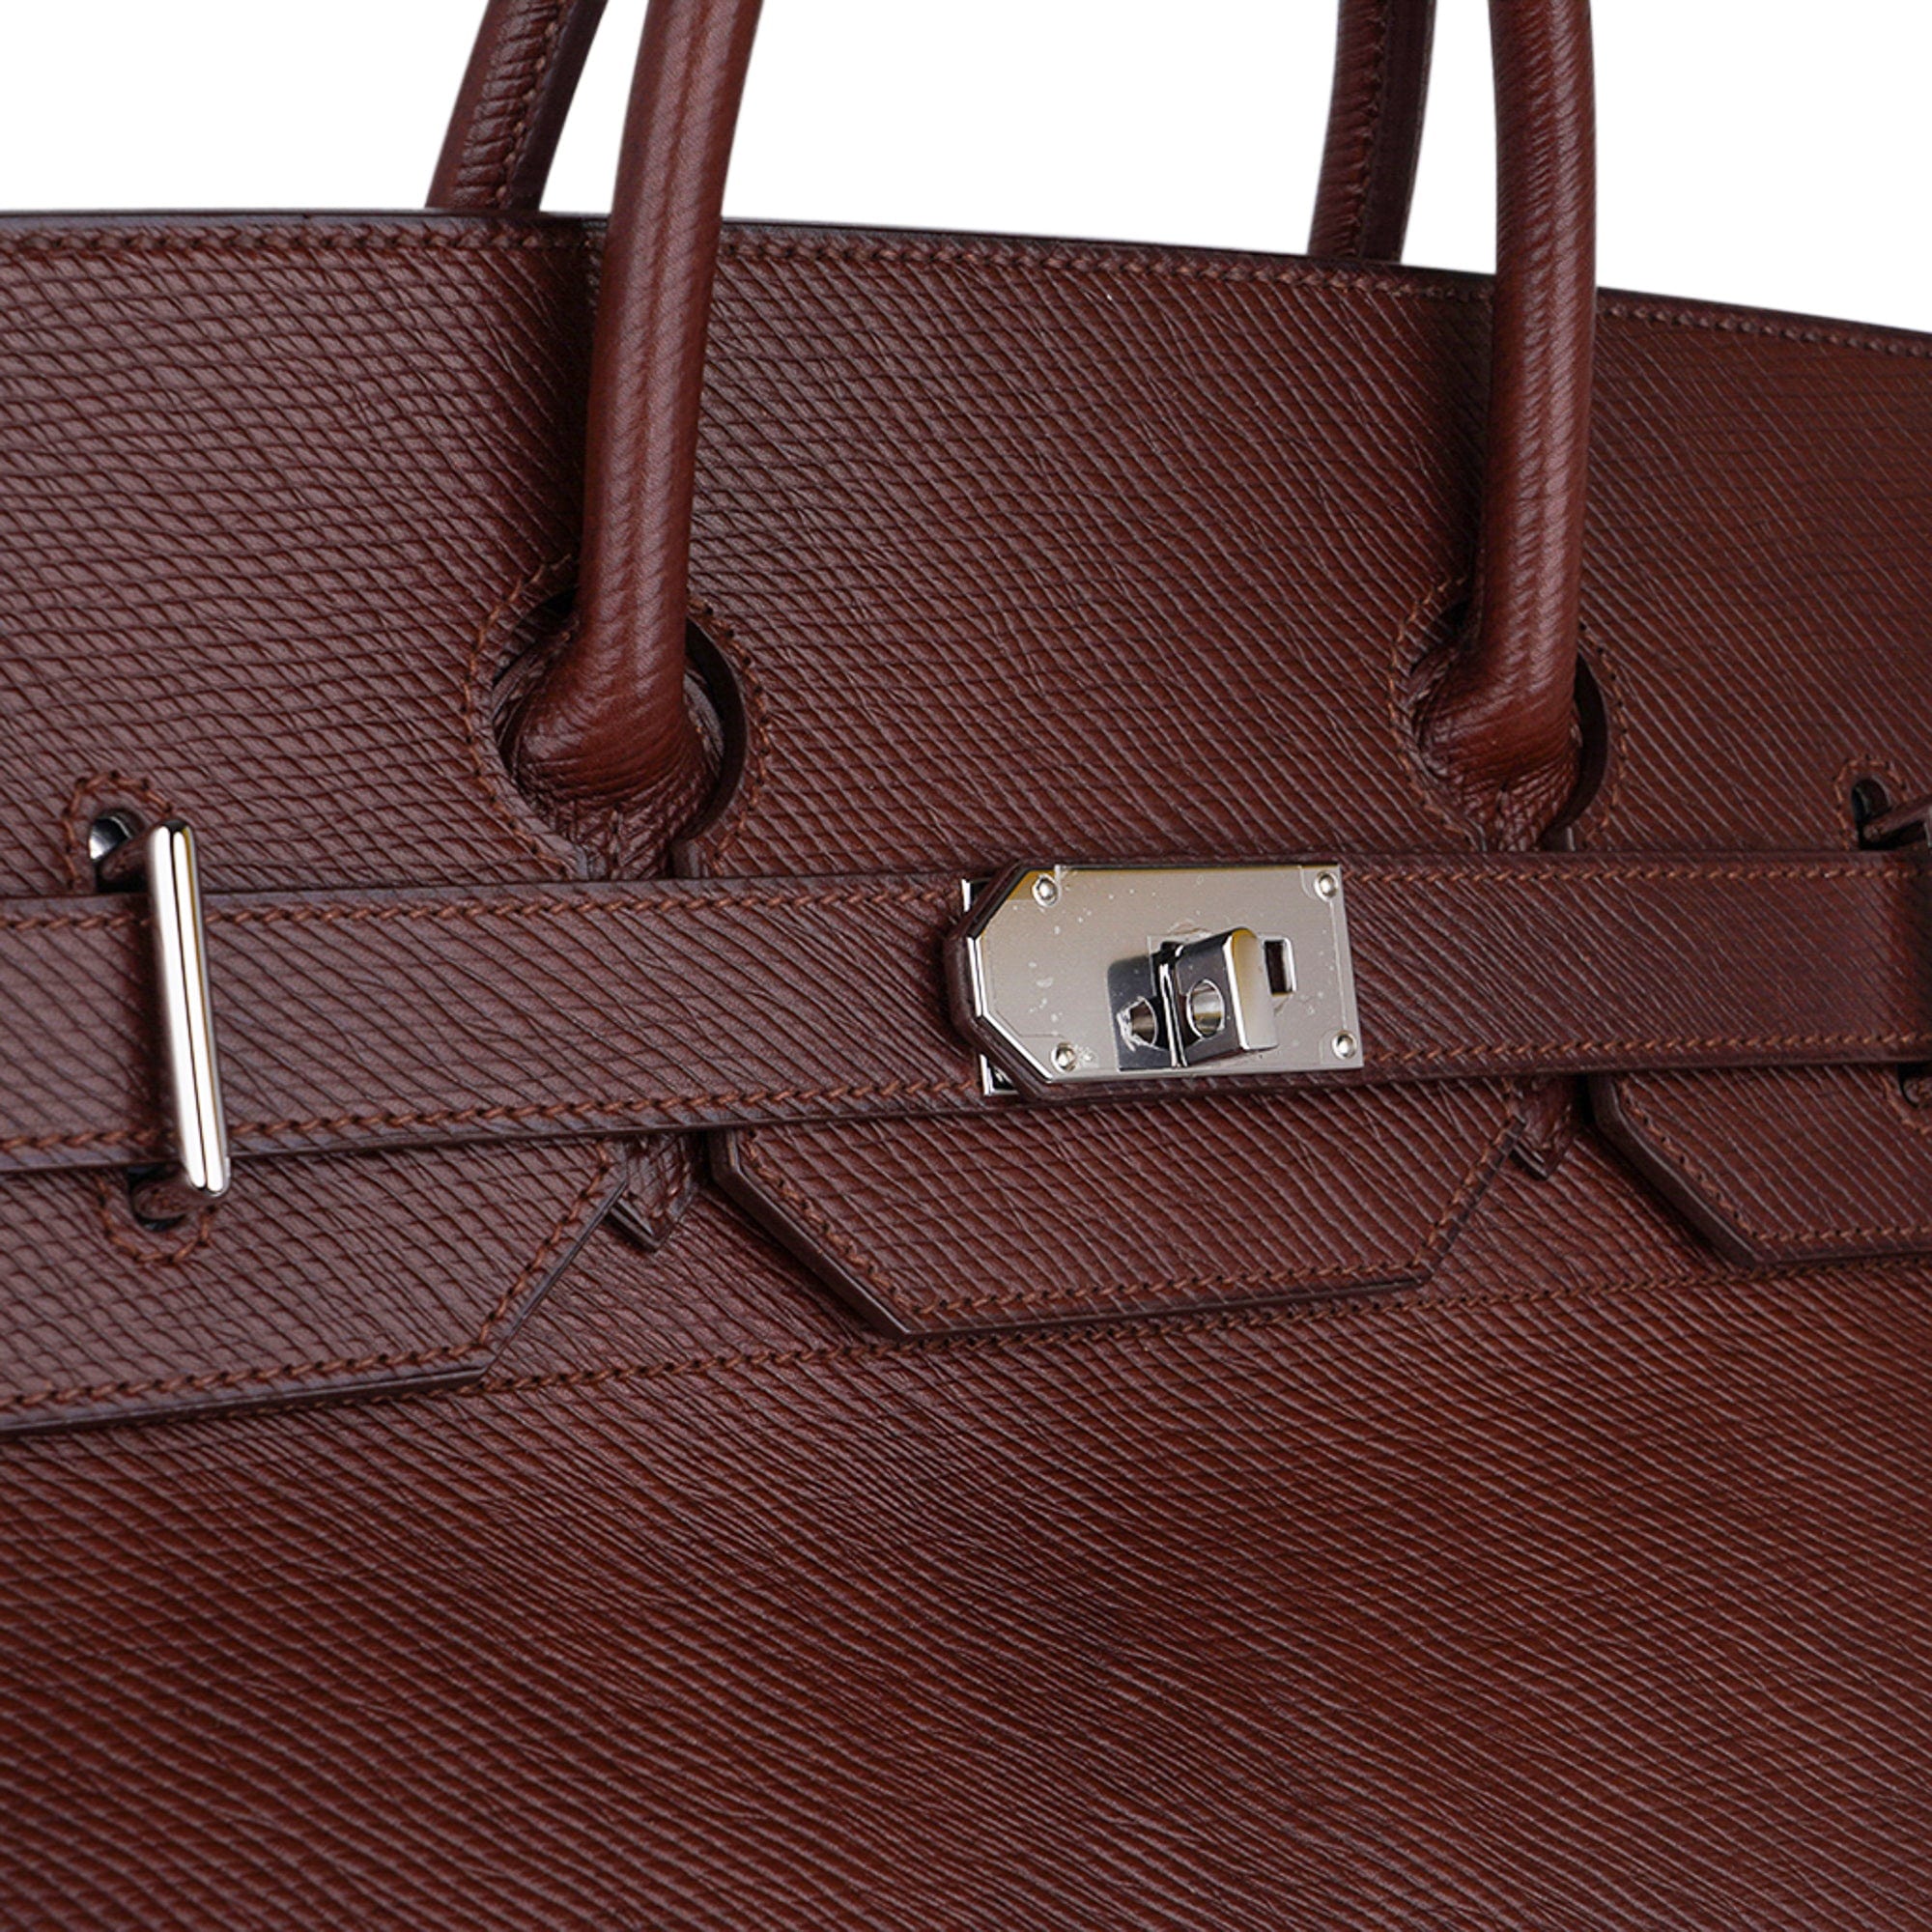 Hermes Birkin 50 Bag Limited Edition Flag Hac Leather Suede Toile